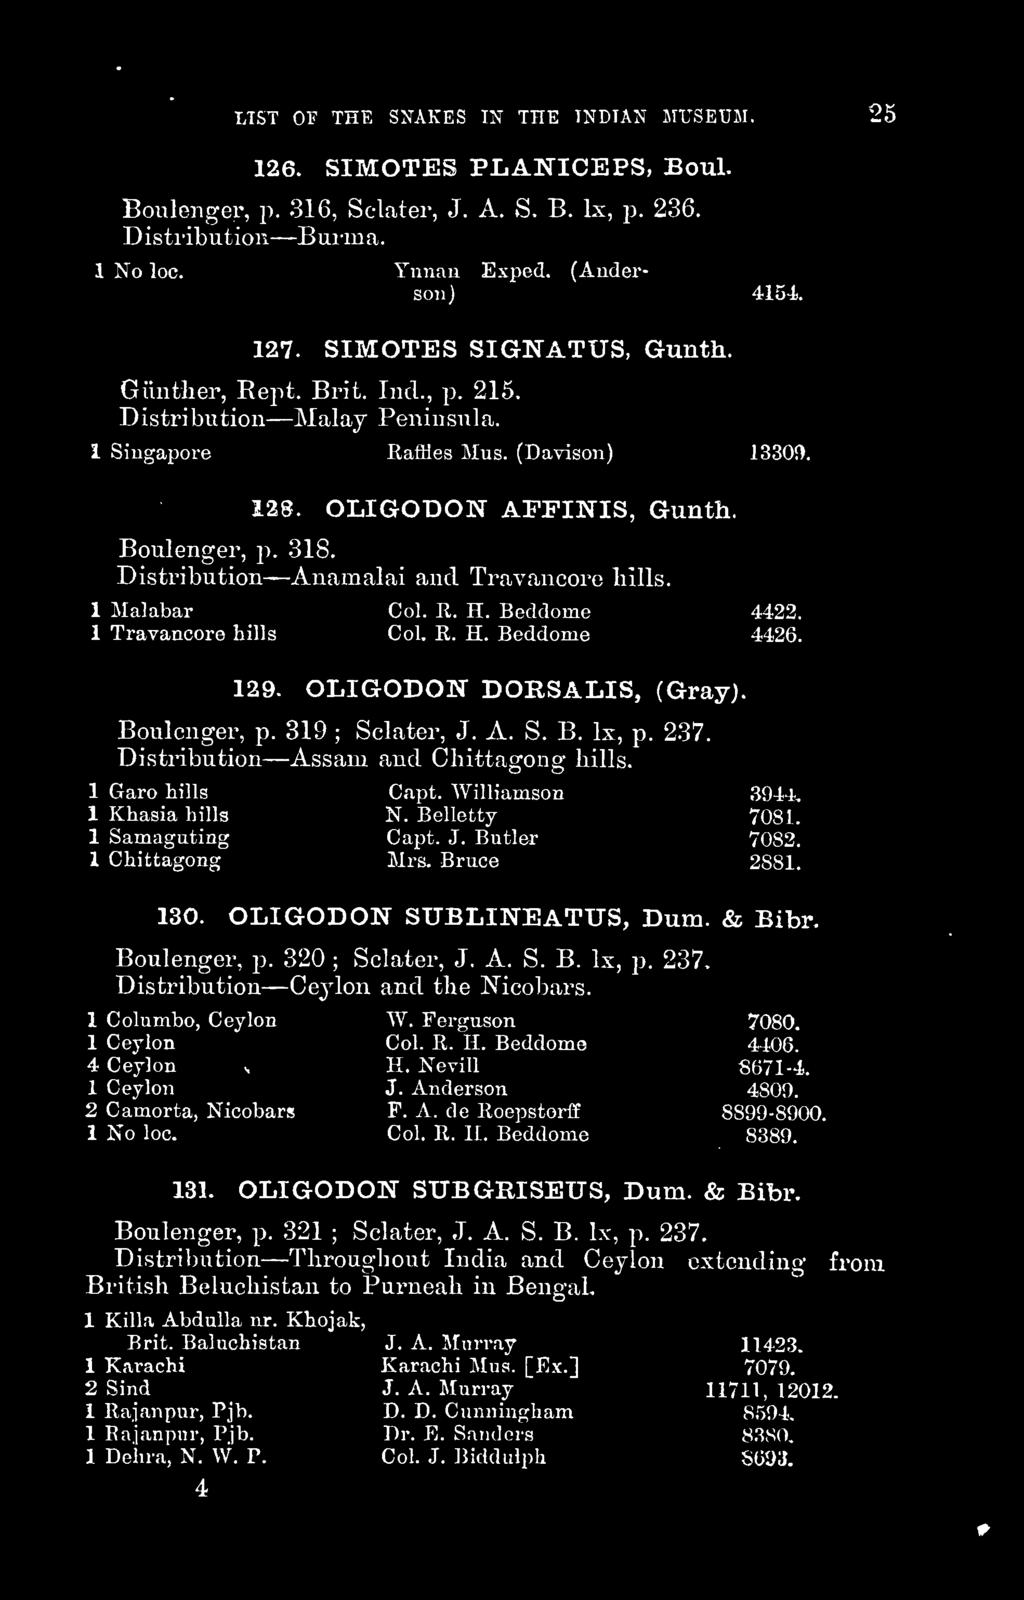 Distribution^Anamalai and Travancore bills. 1 Malabar Col. R. H. Beddome 4422. i Travancore hills Col. R. H. Beddome 4426. 129. OLIGODON DORSALIS, (Gray). Boulenger, p. 319 ; Sclater, J. A. S. B. Is, p.